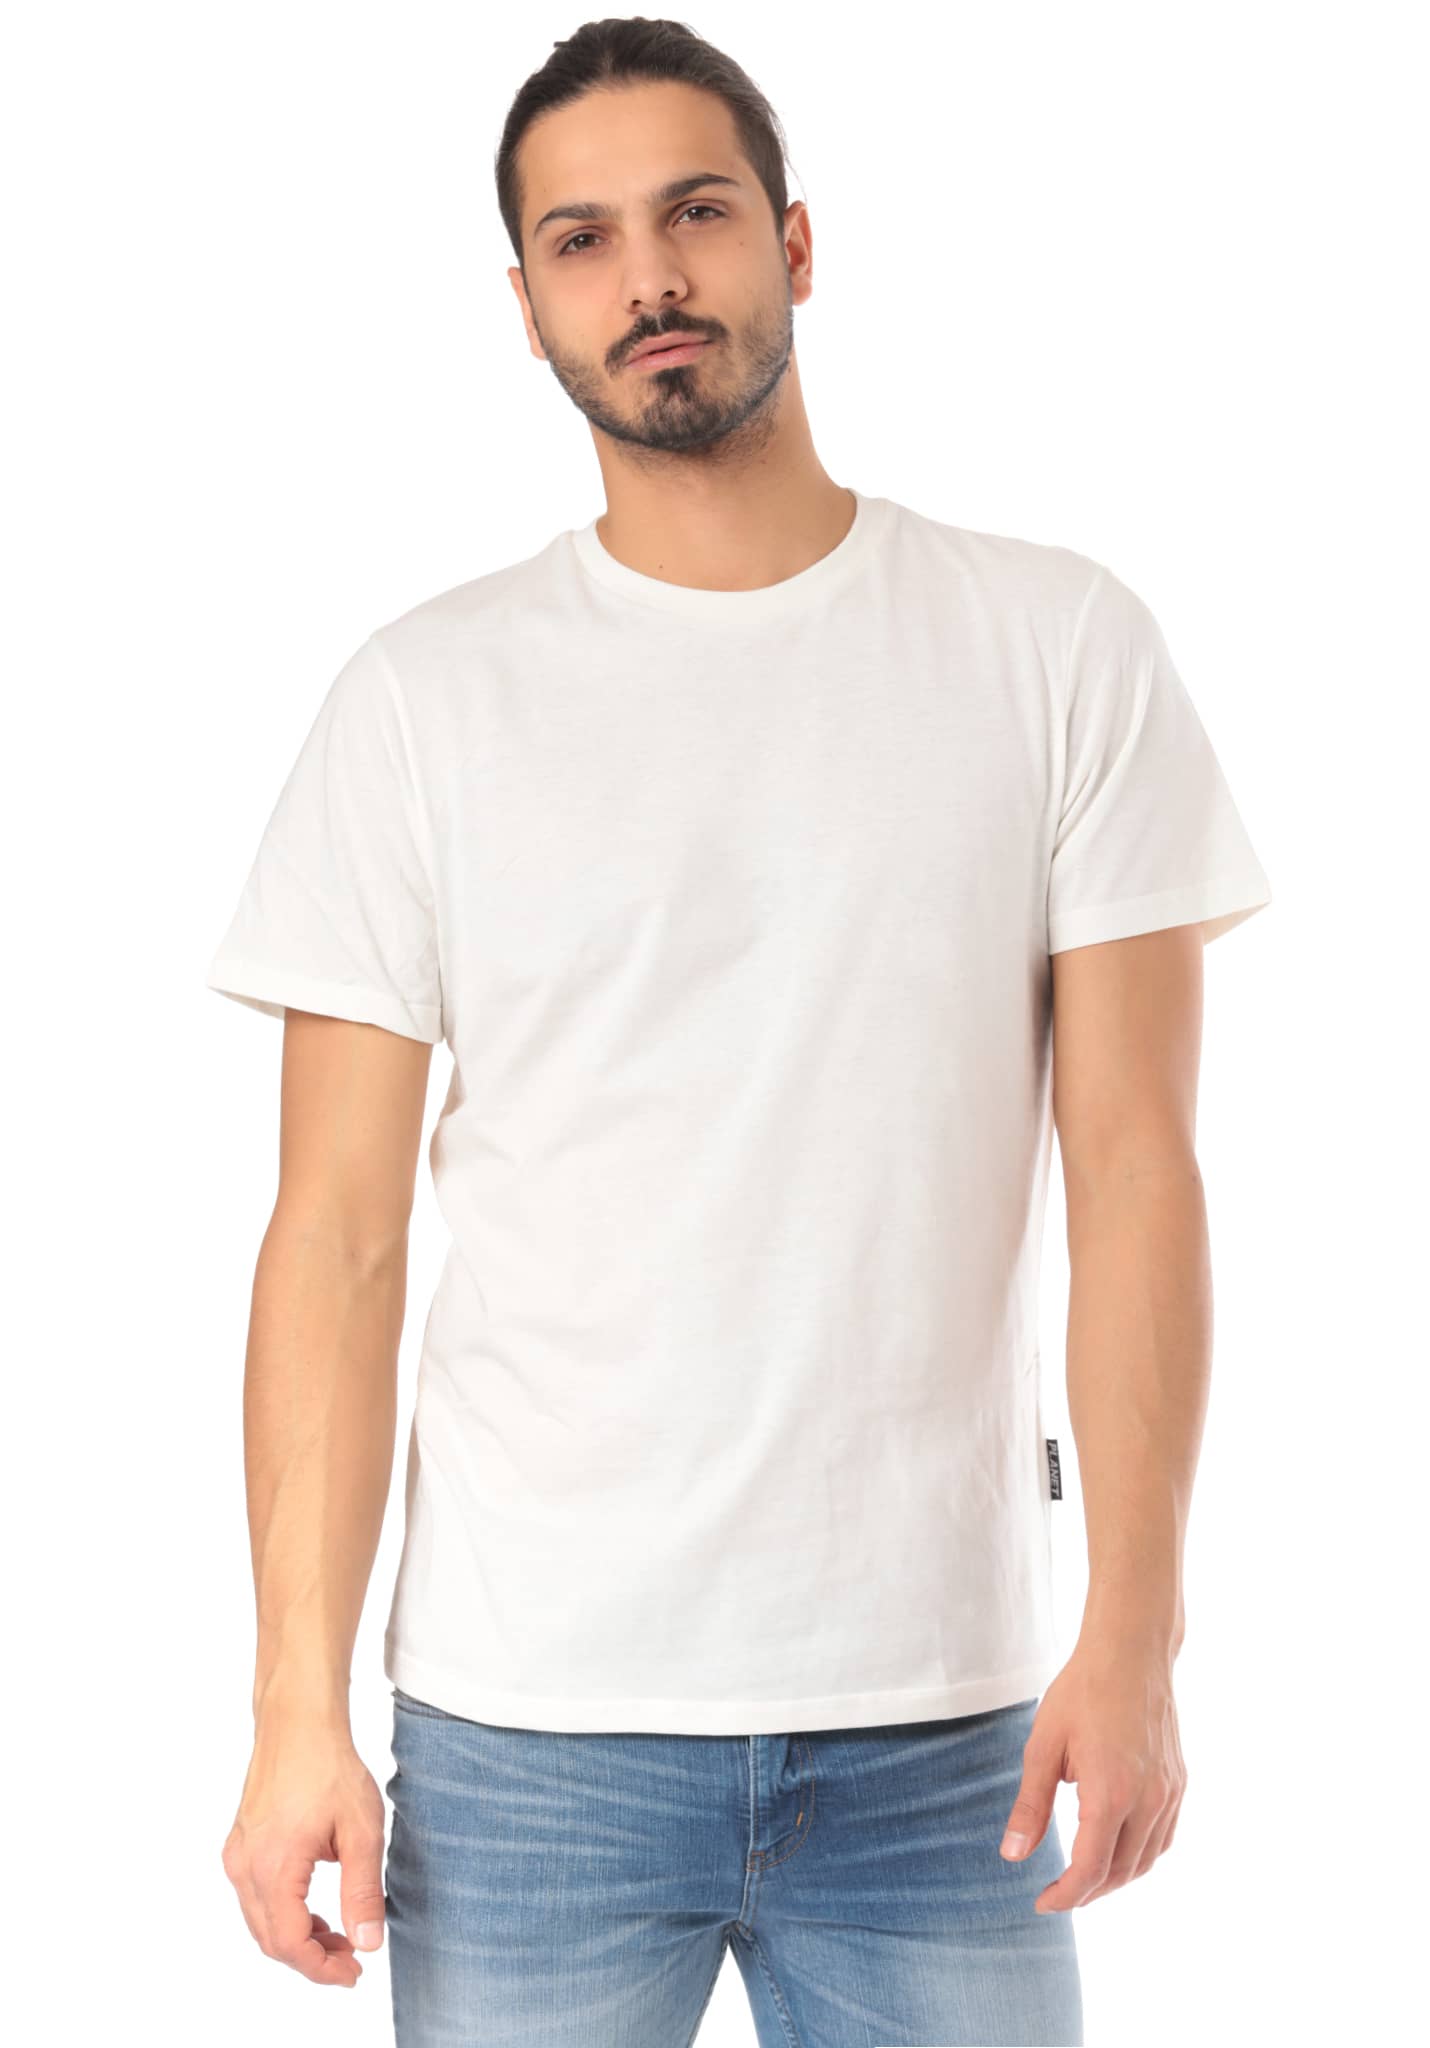 Planet Sports Double Rneck T-Shirt weiß XL